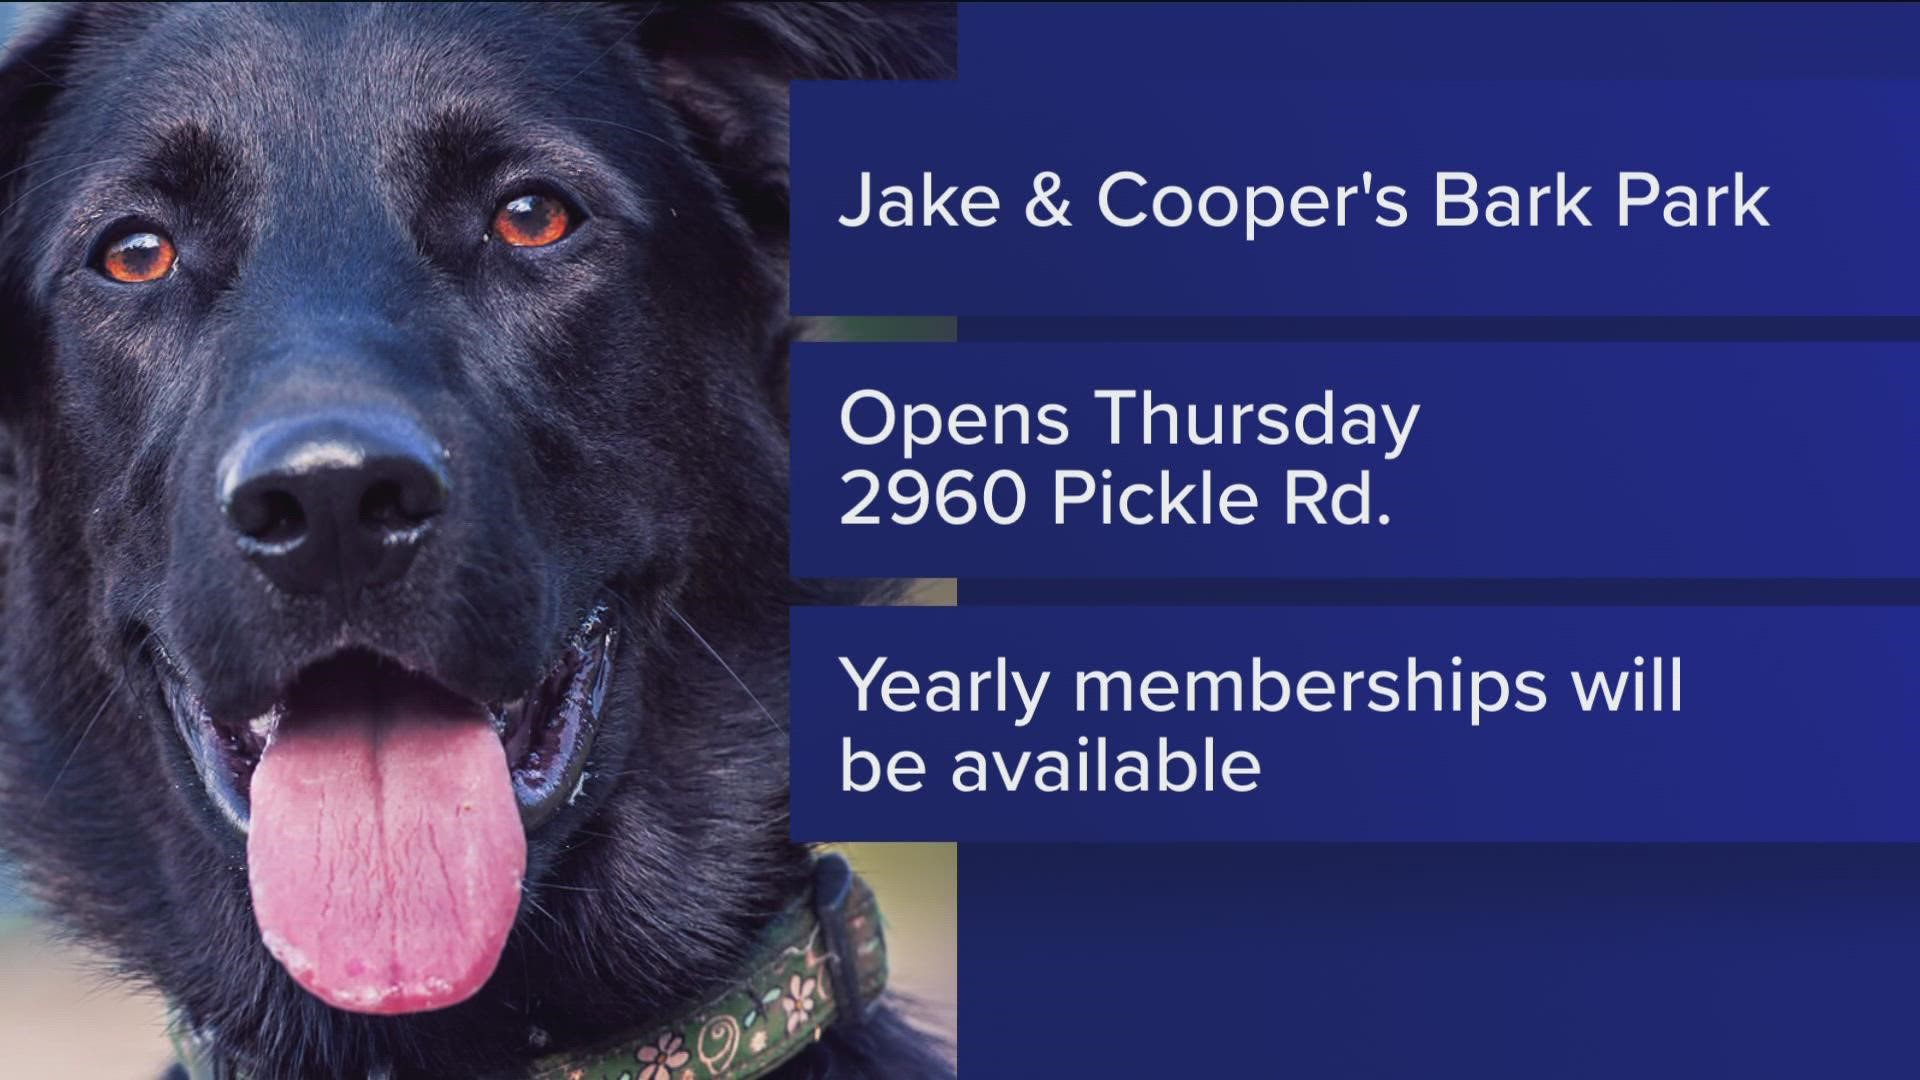 Jake & Cooper's Bark Park opening soon in Oregon